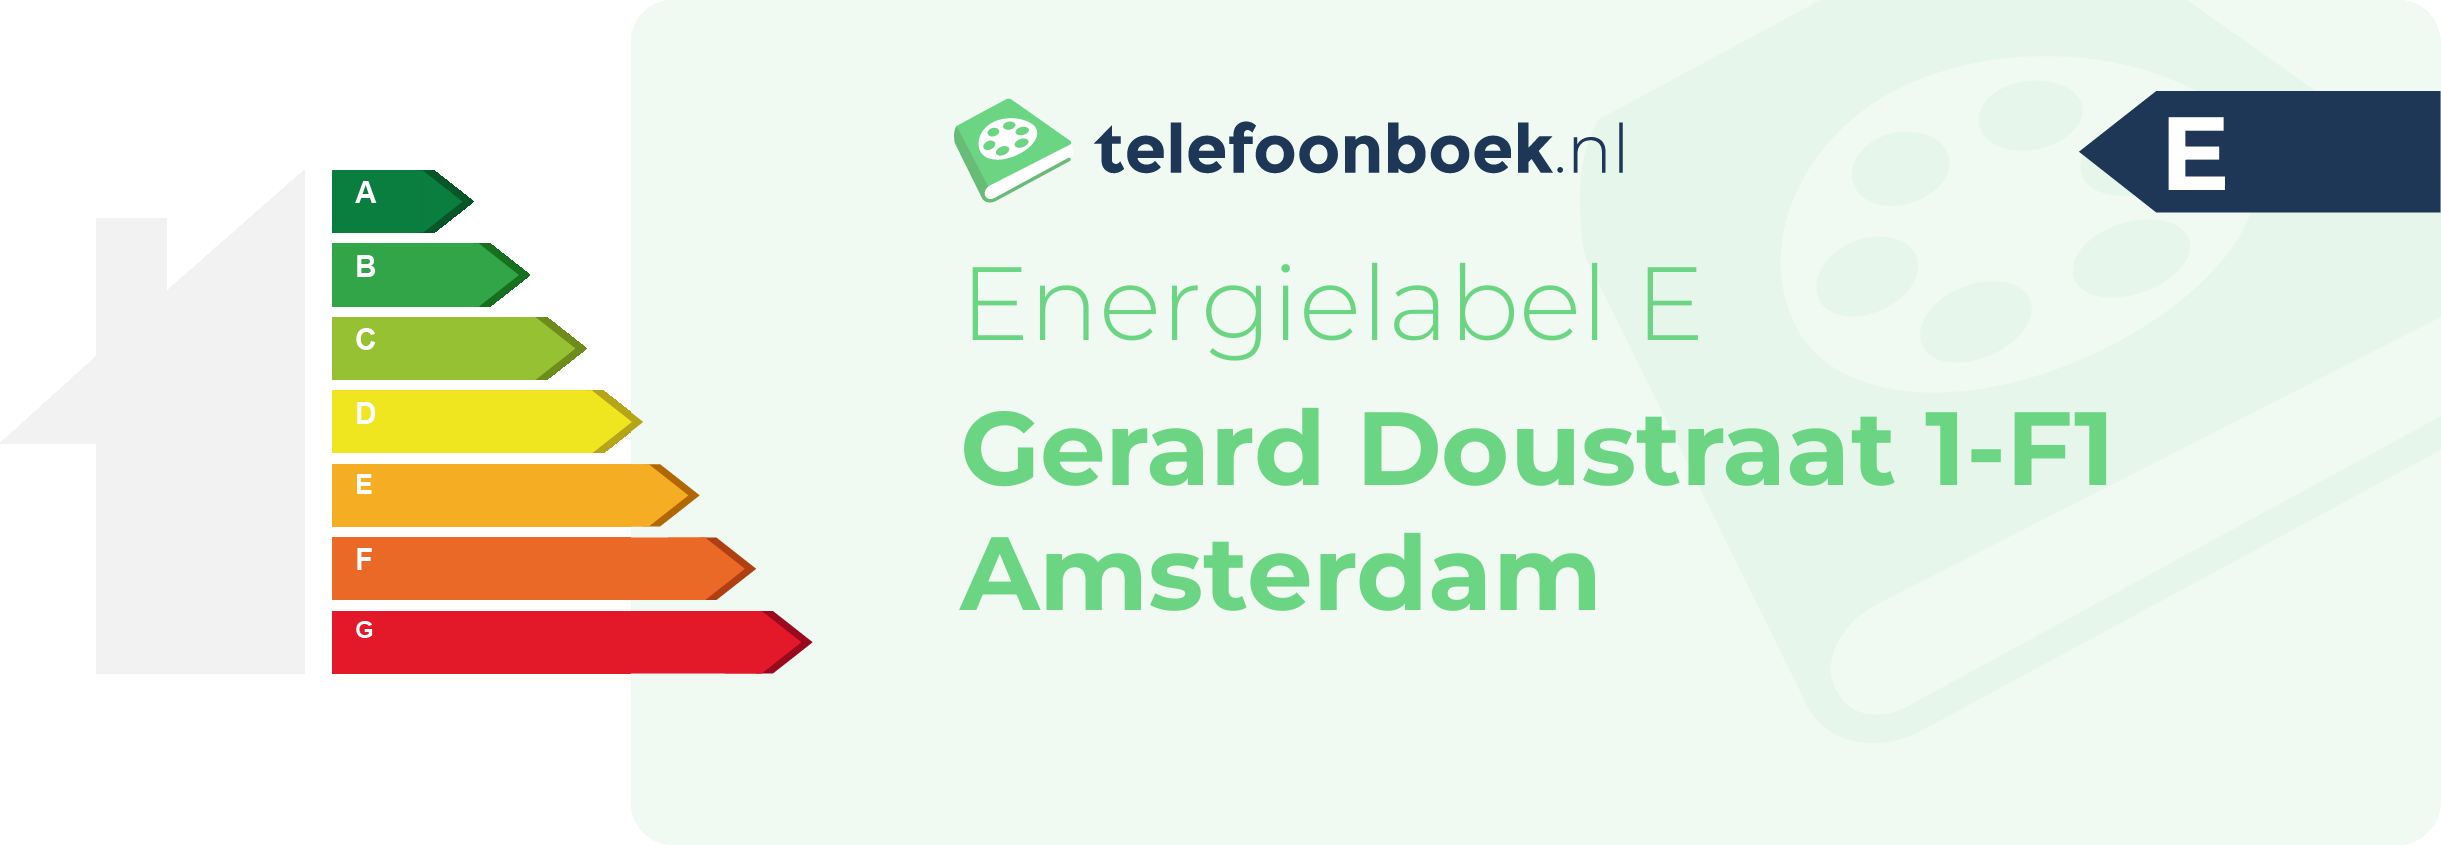 Energielabel Gerard Doustraat 1-F1 Amsterdam